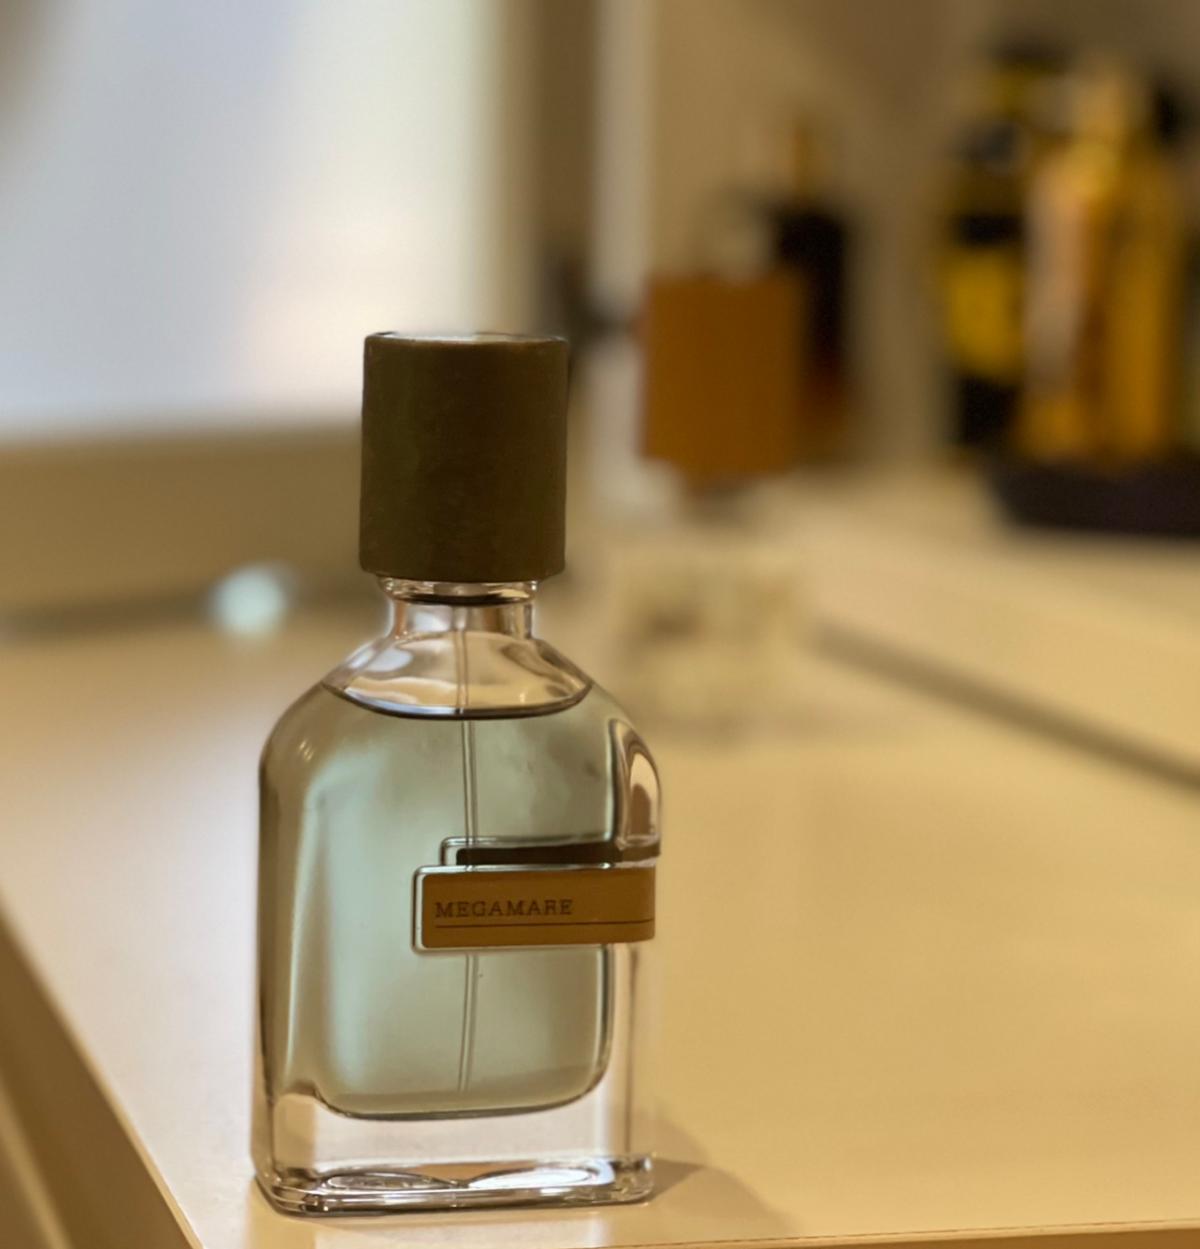 Megamare Orto Parisi perfume - a fragrance for women and men 2019